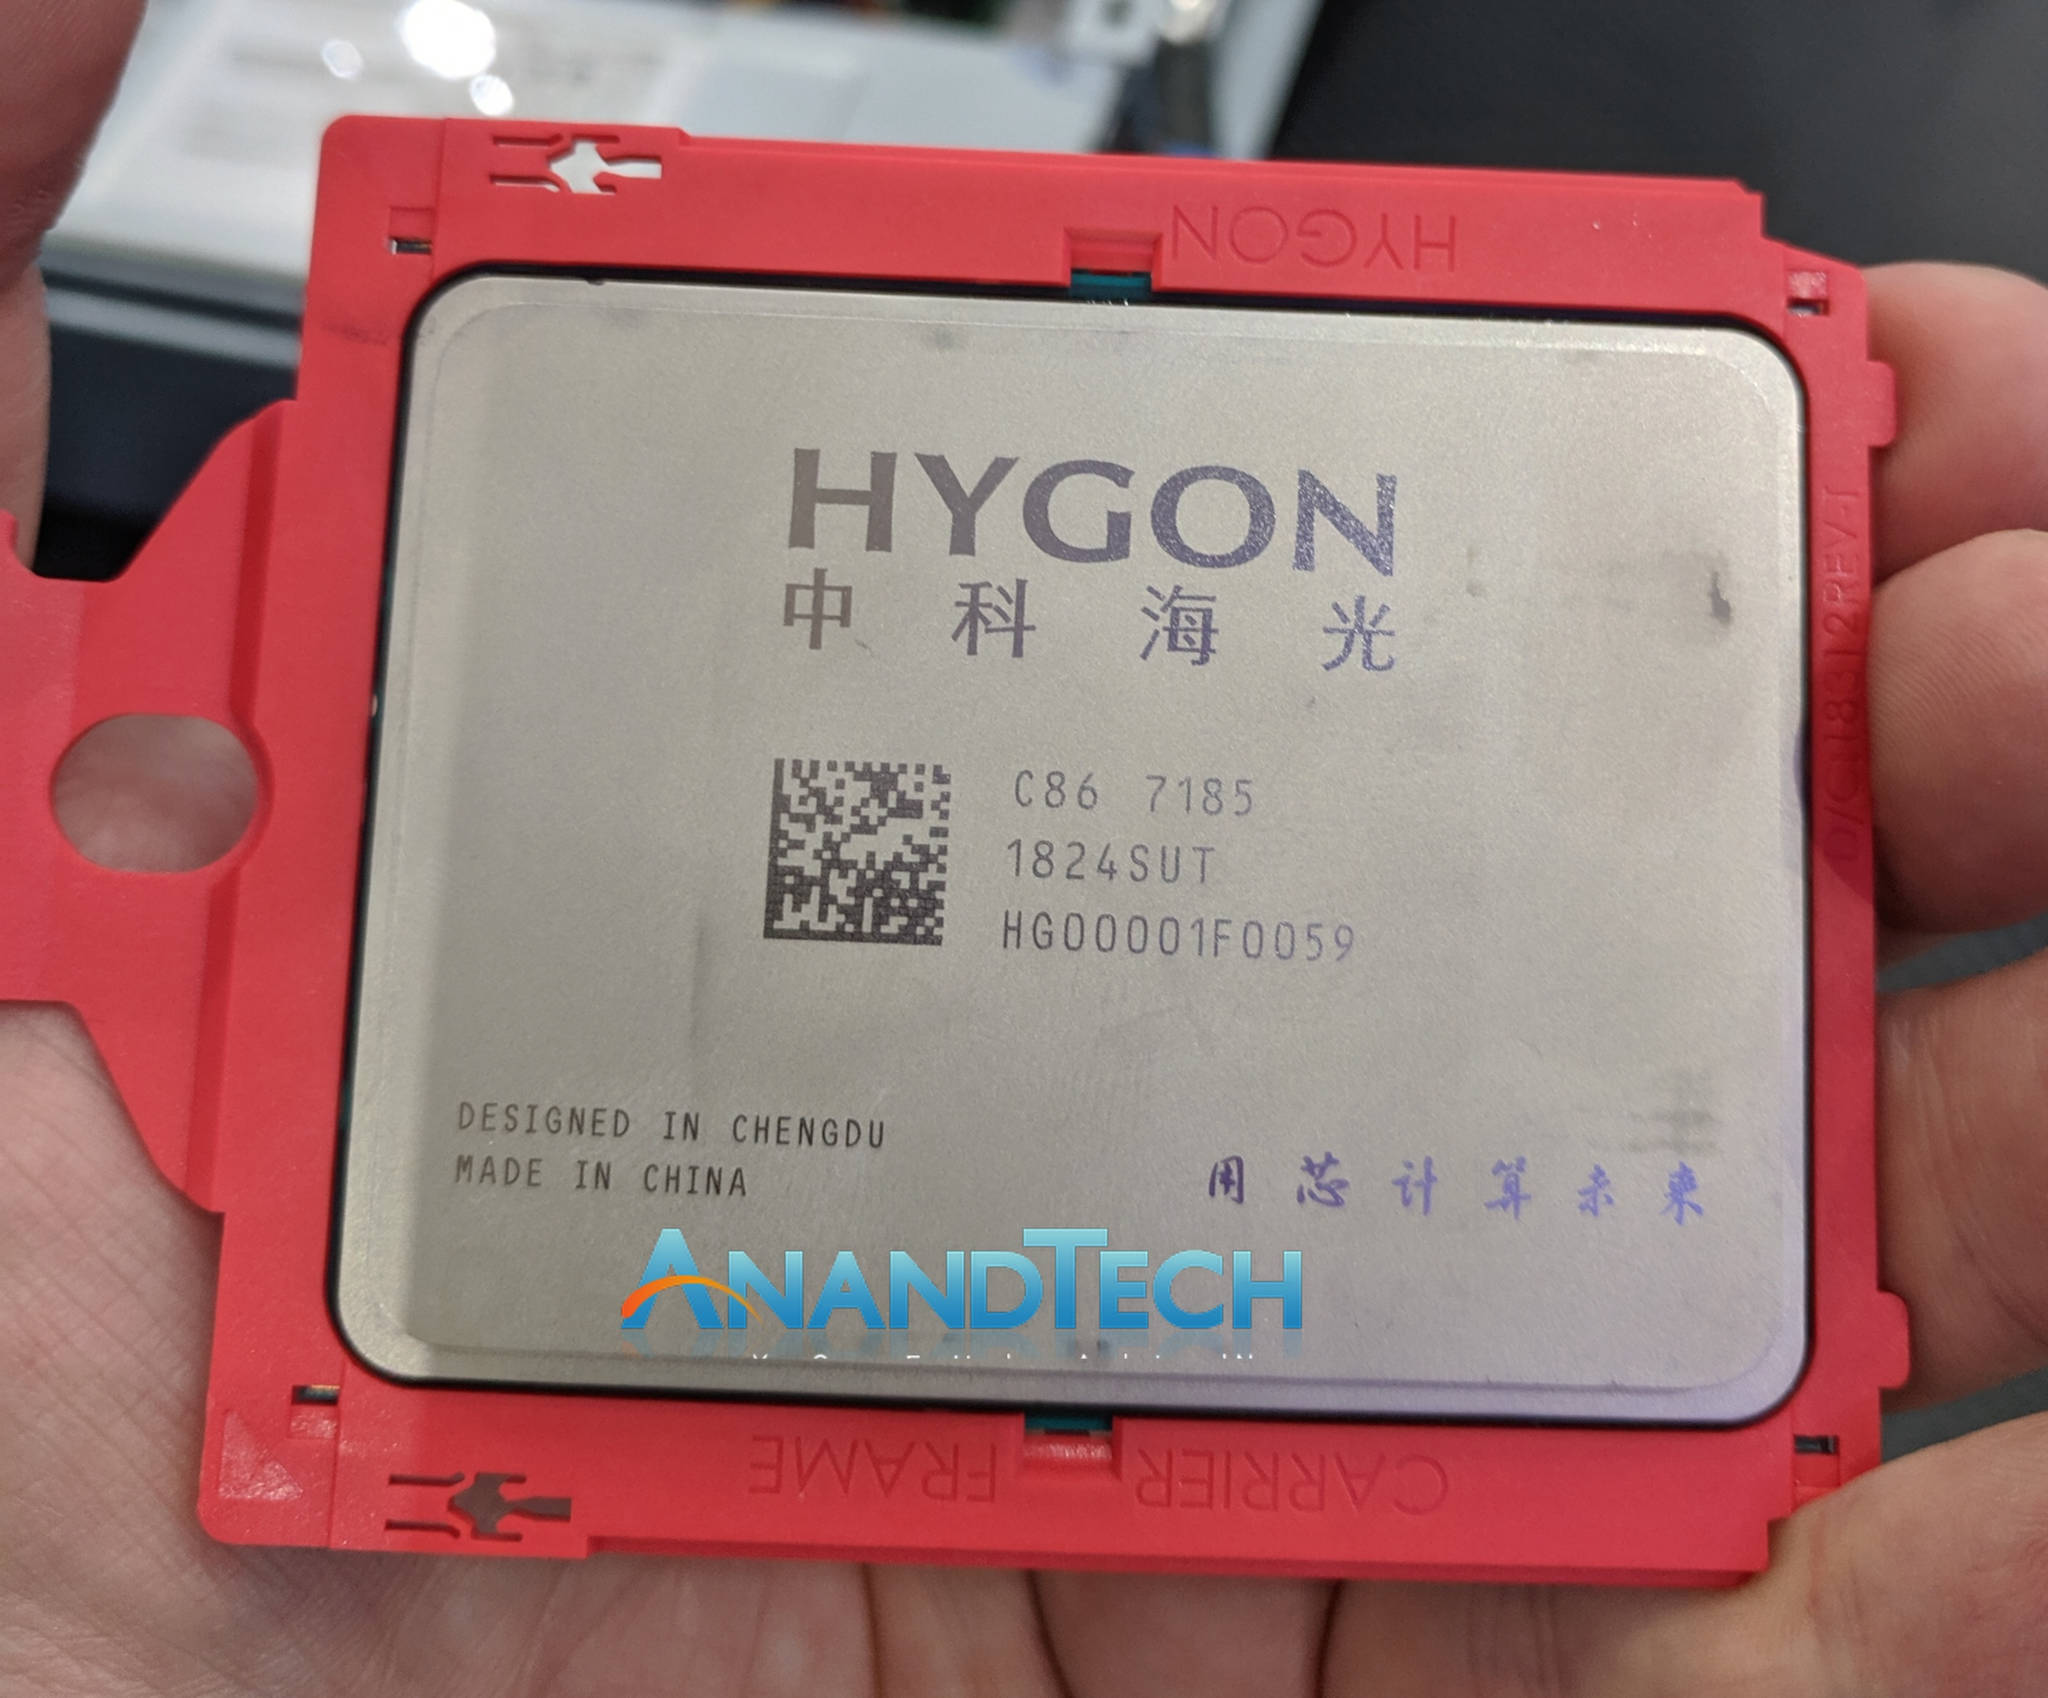 Hygon (2).jpg